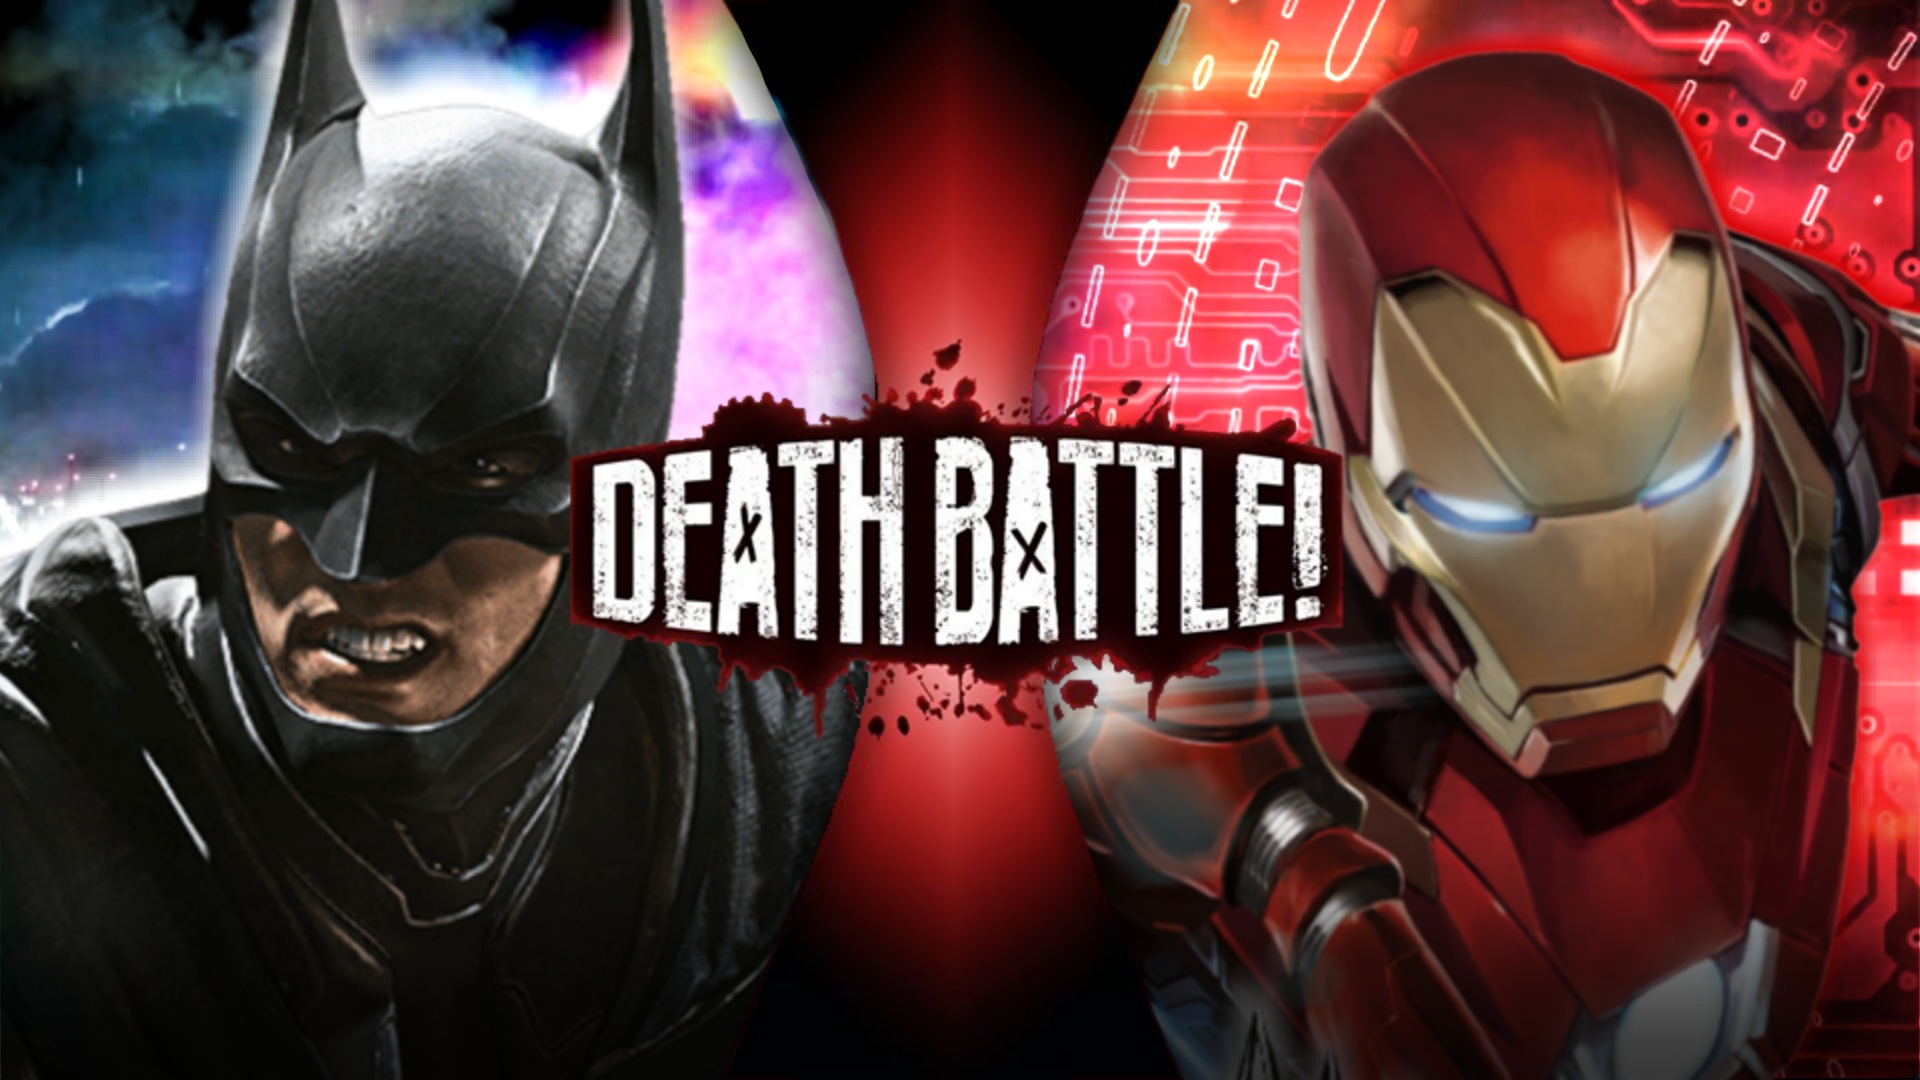 Batman vs iron